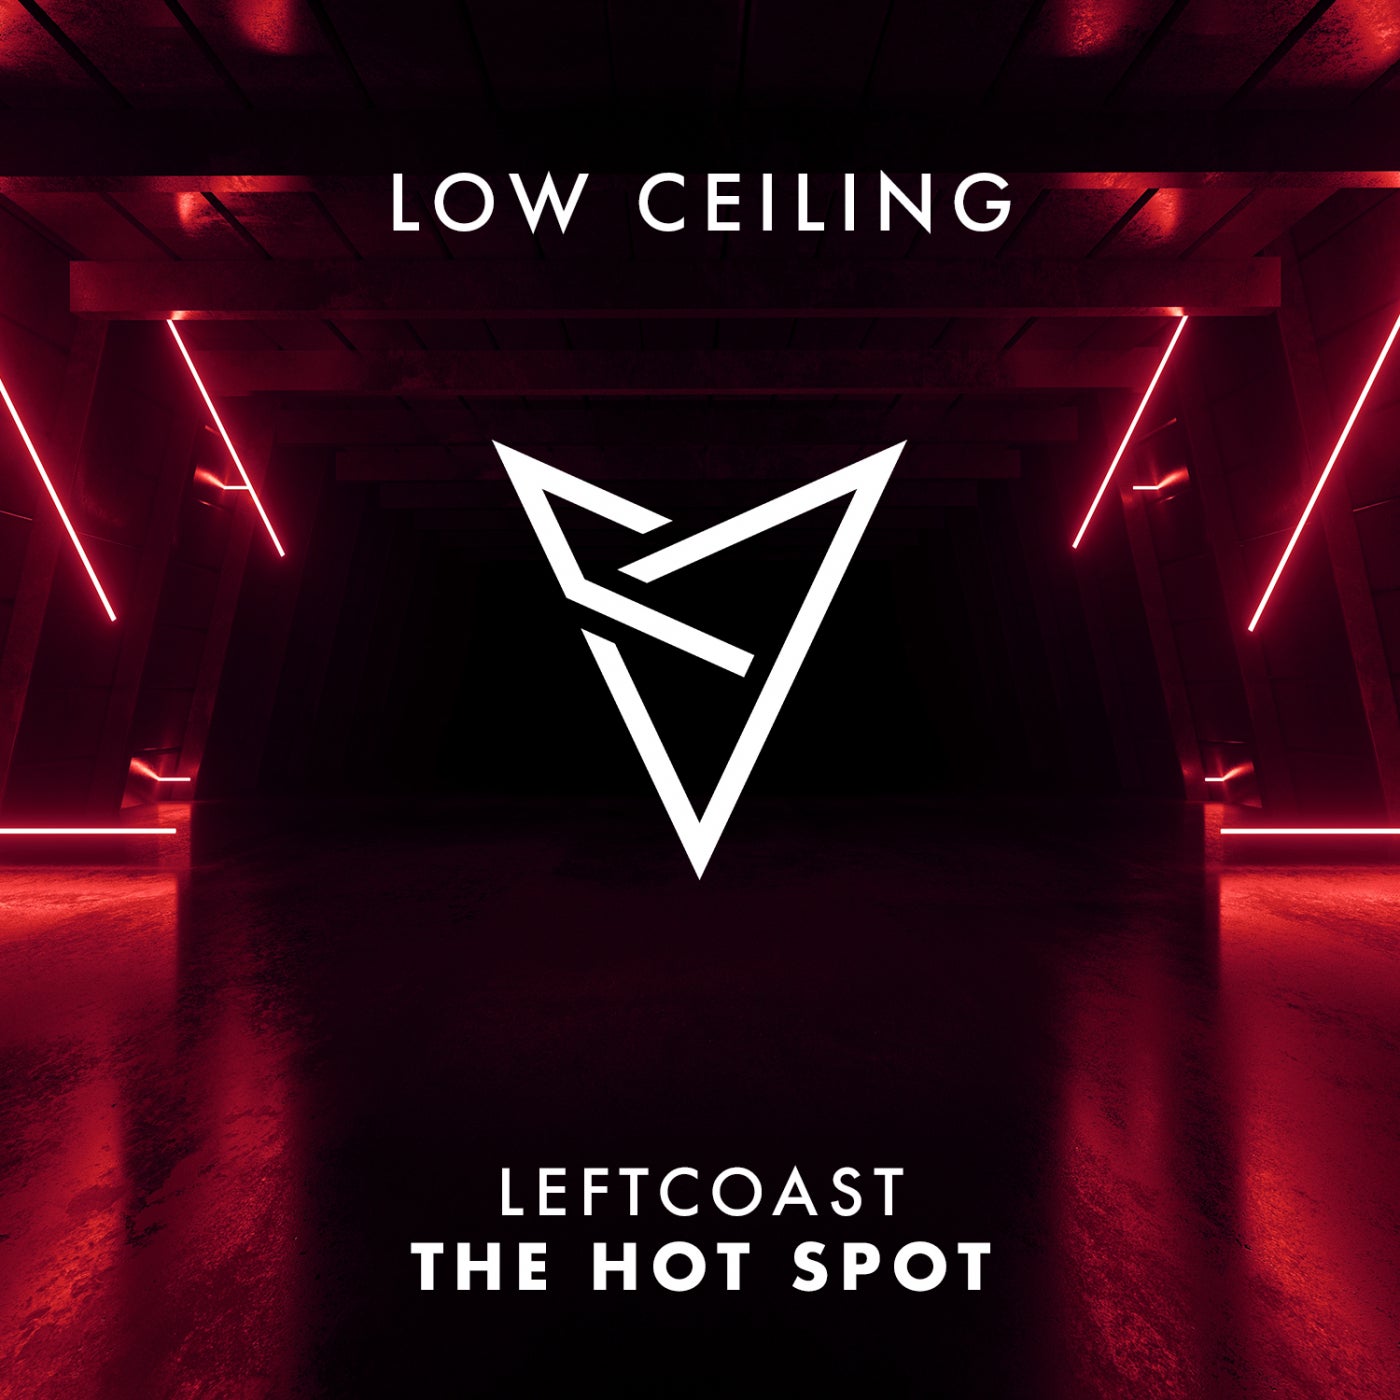 Leftcoast - THE HOT SPOT [LOWC048]